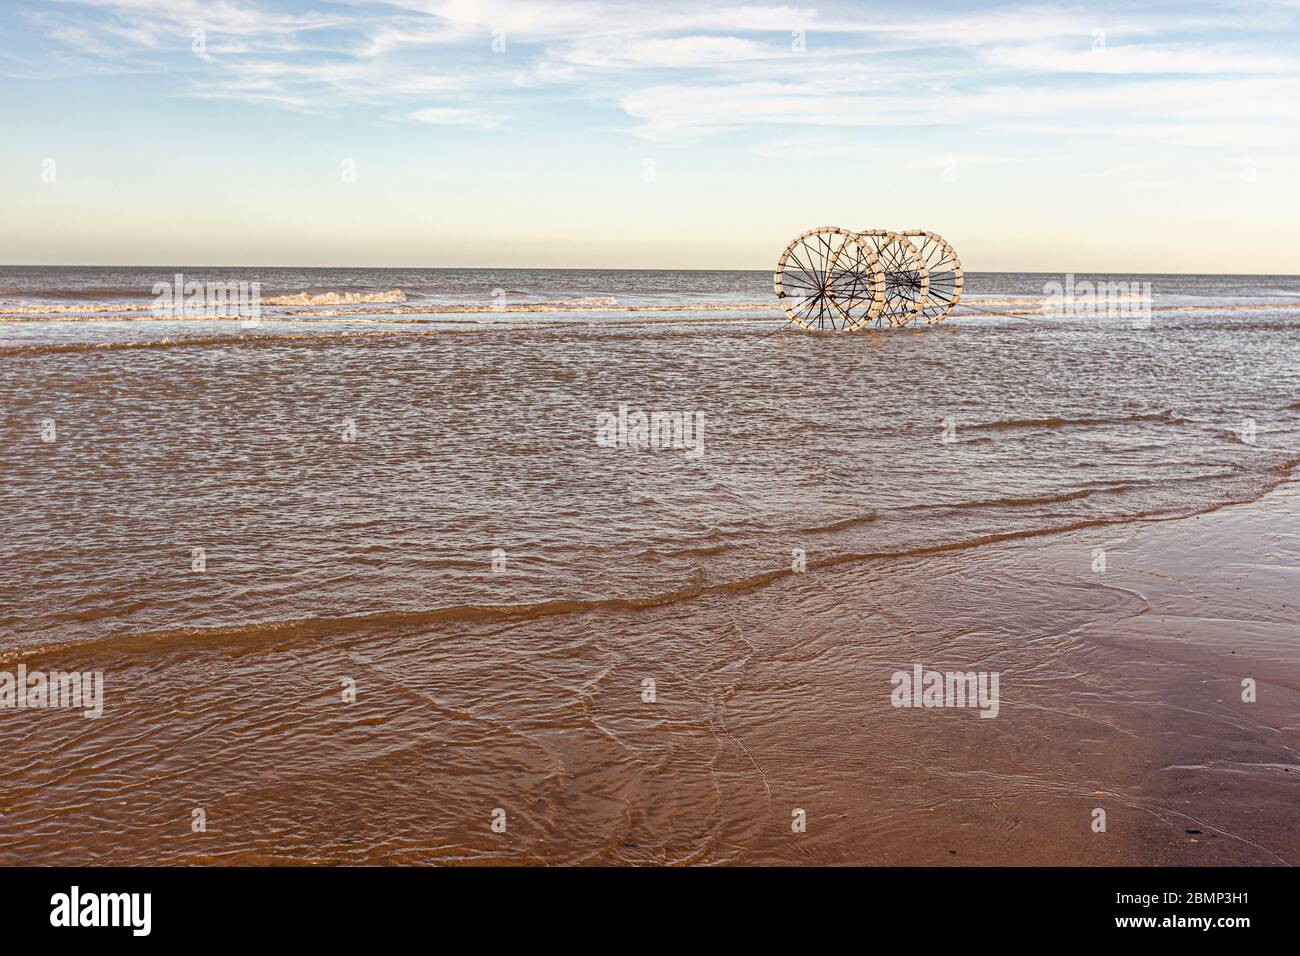 Strandbeest - Artwork on beach at Domburg, Netherlands Stock Photo